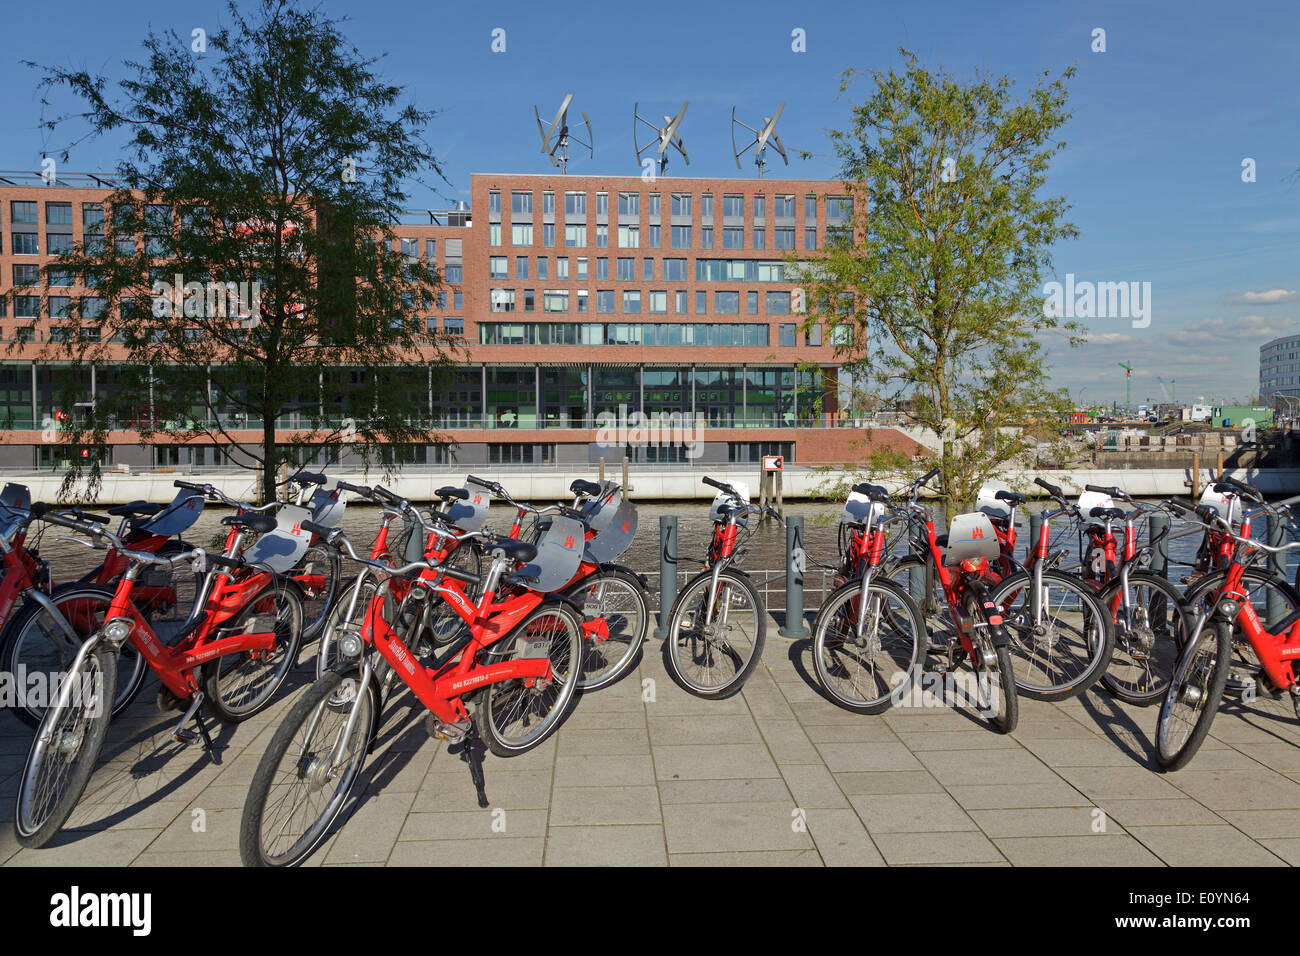 rental bikes in front of Greenpeace Headquarters, Elbarkaden, Harbor City, Hamburg, Germany Stock Photo